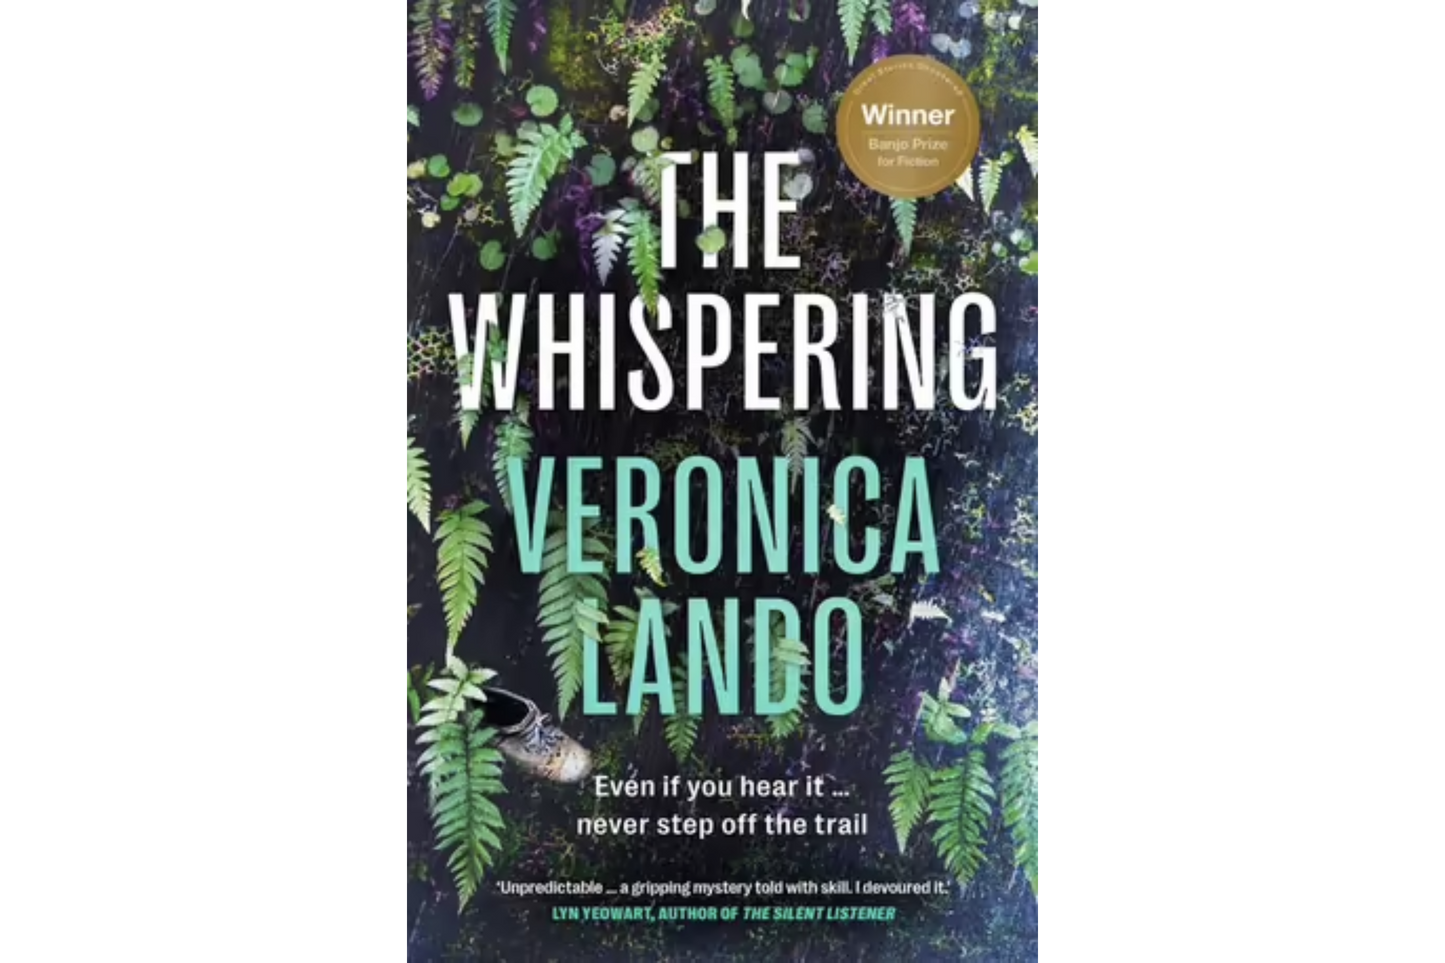 The Whispering (Veronica Lando)